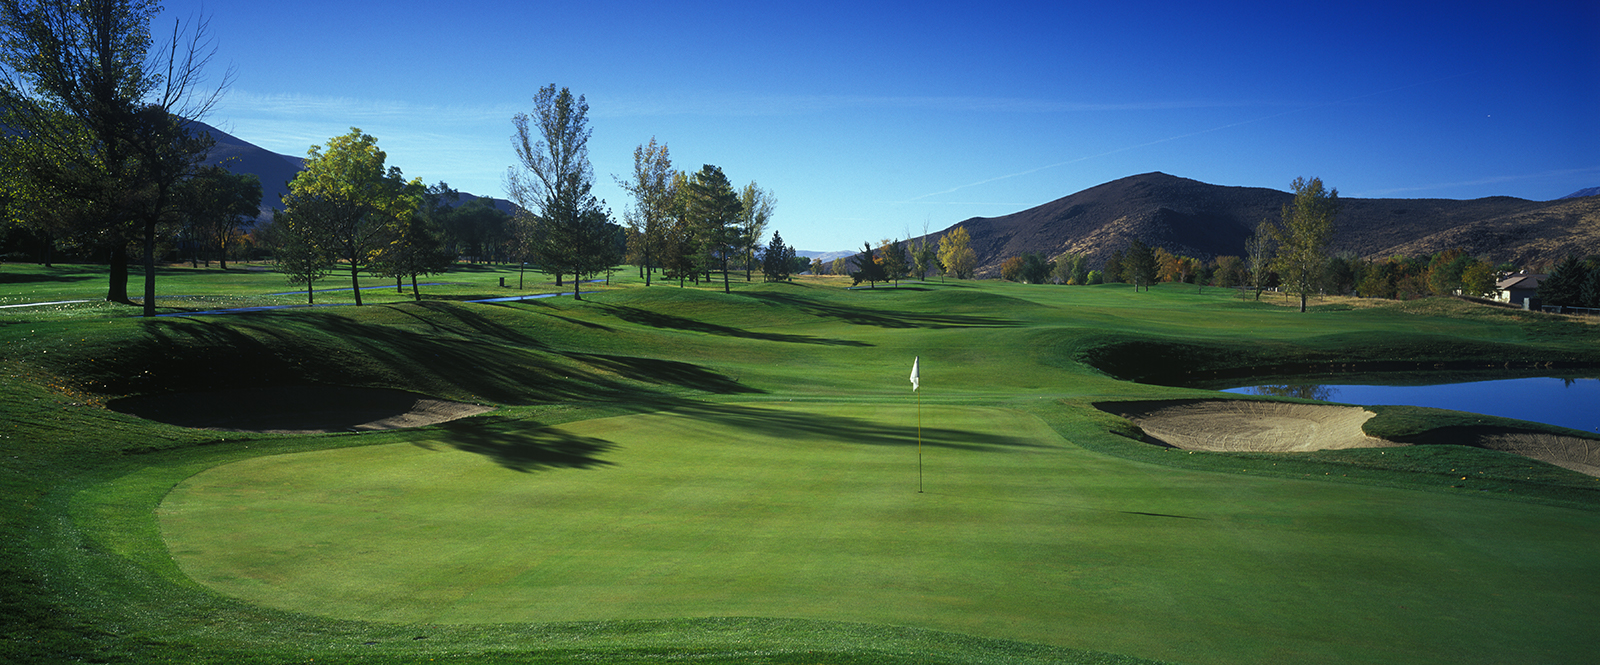 hidden valley golf course scandal in norco